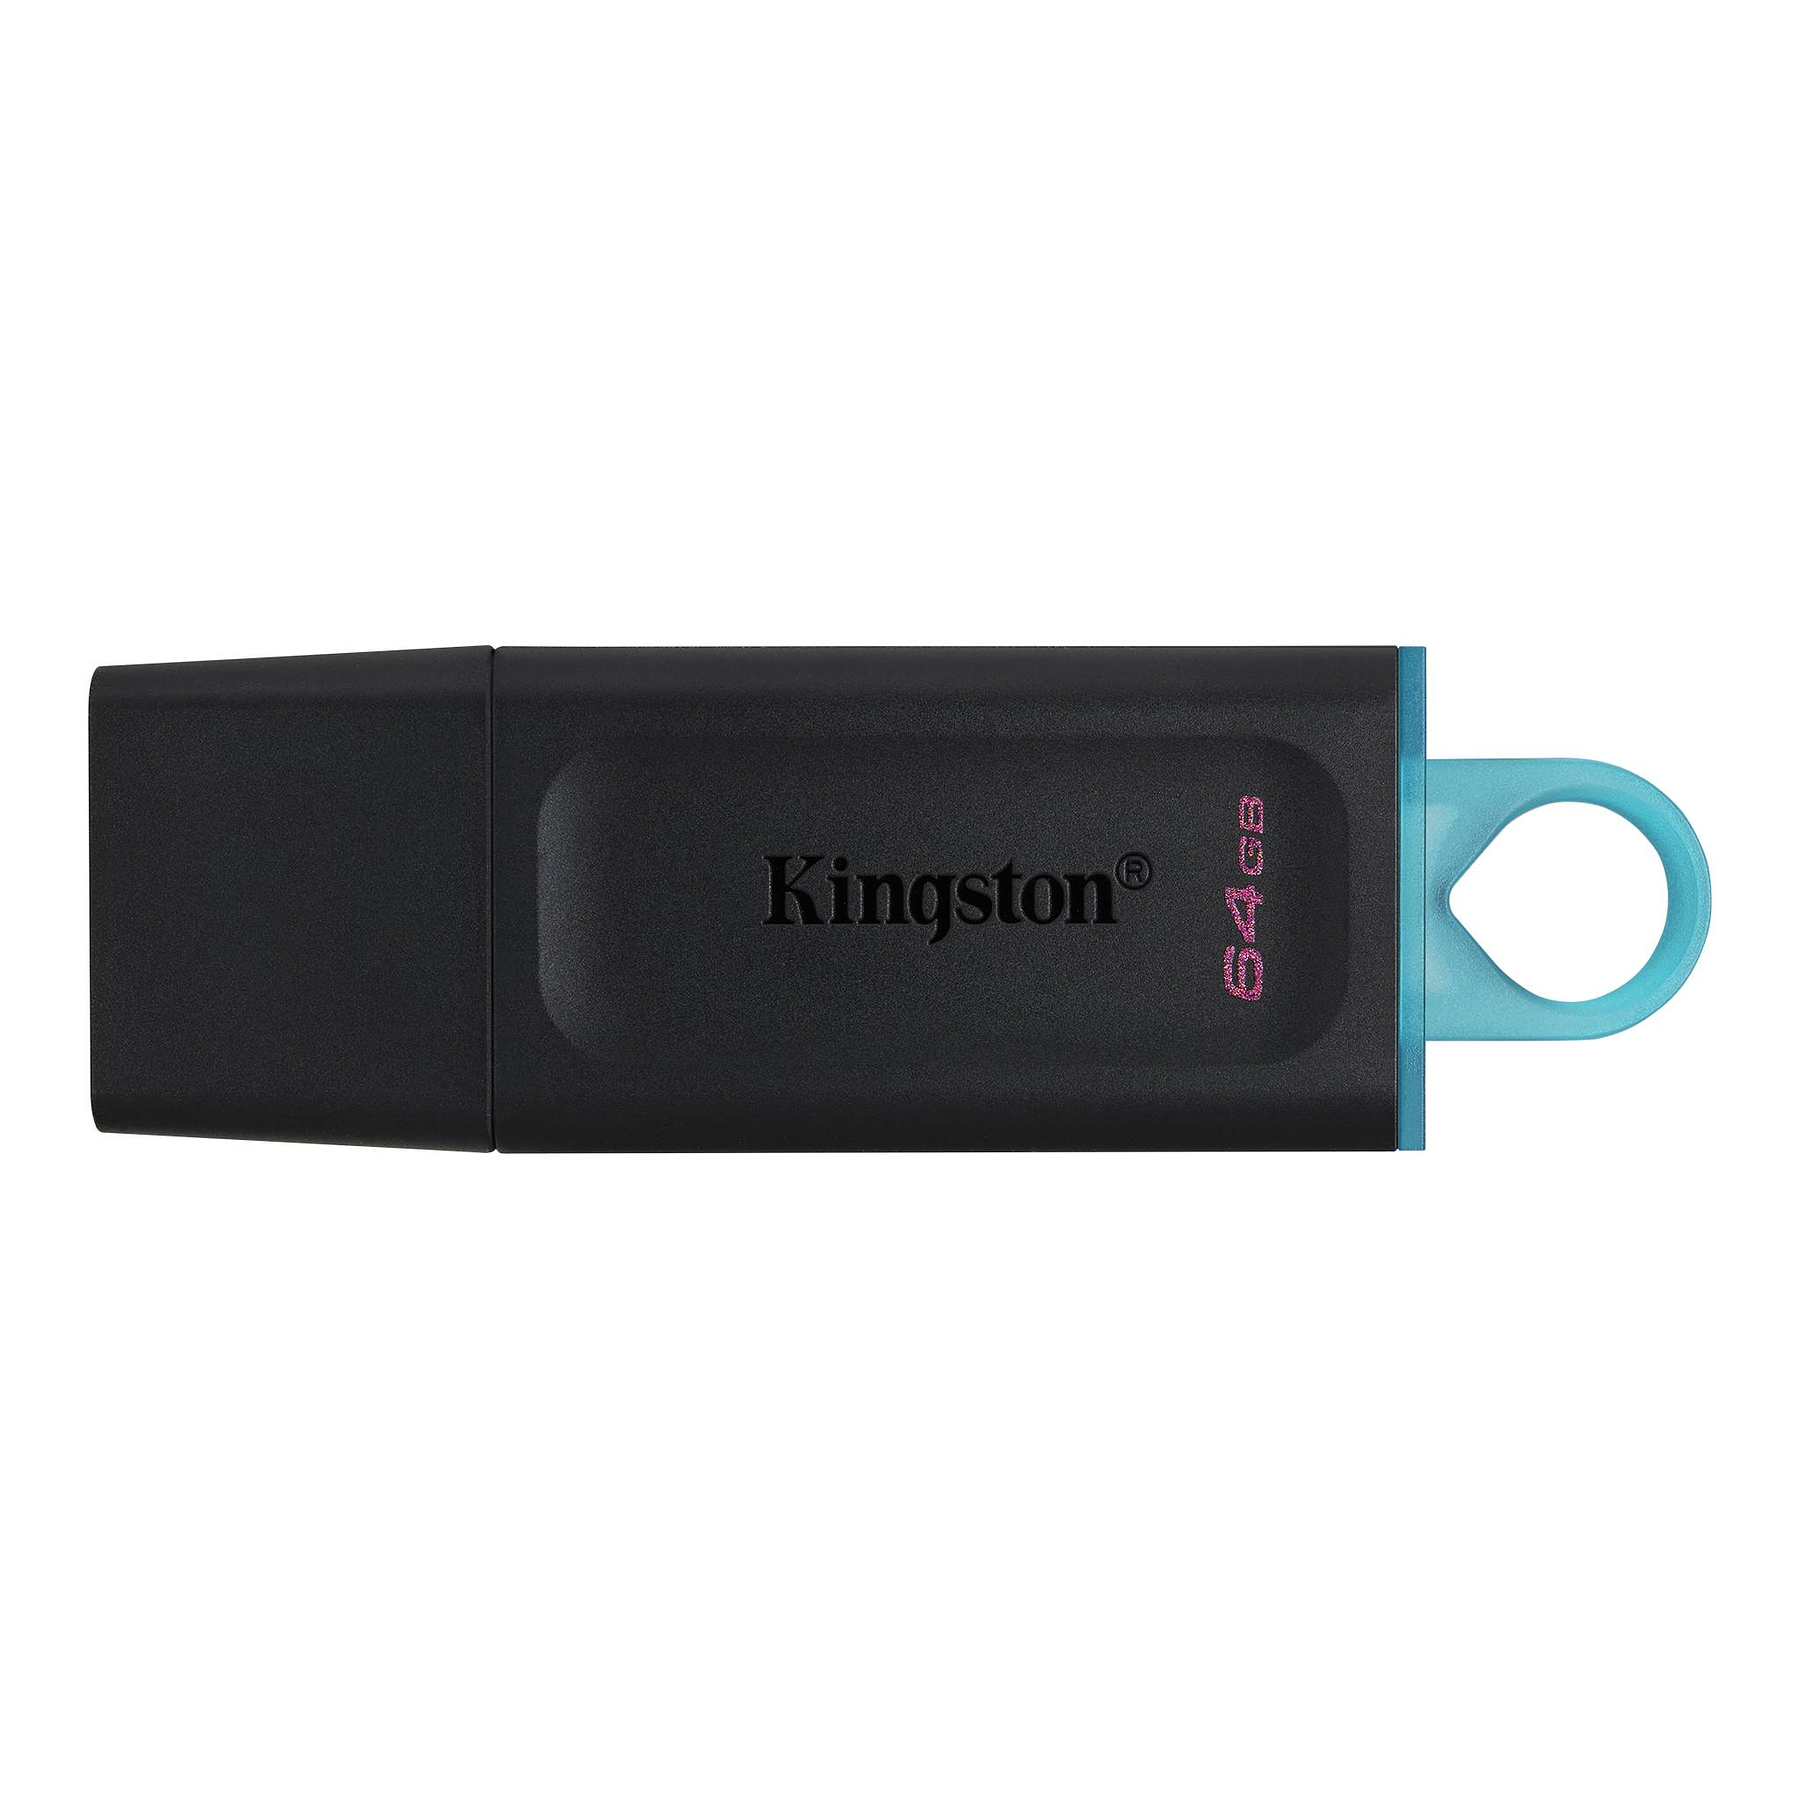 Kingston DataTraveler Exodia Pendrive de 64 GB Color Negro